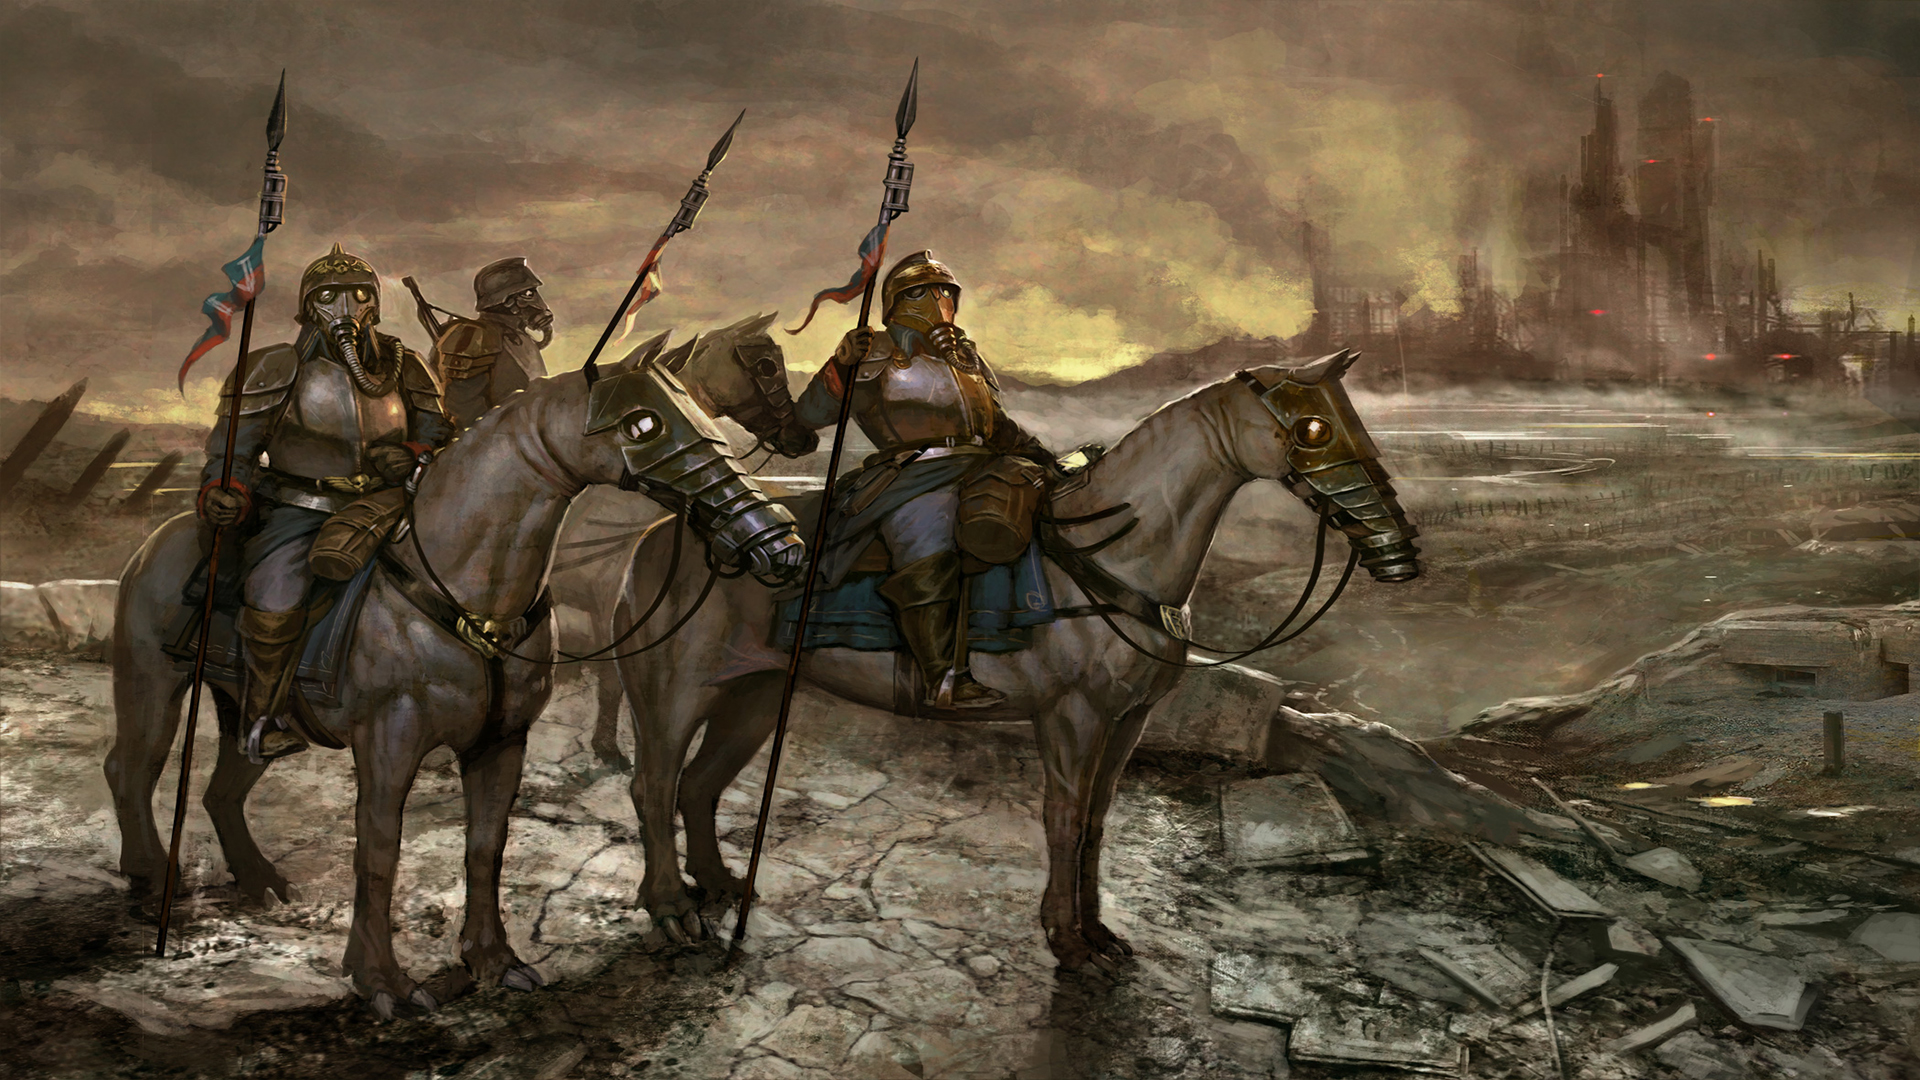 General 1920x1080 Warhammer 40,000 Death Korps of Krieg video games armor video game art horseback horse animals video game characters smoke lance weapon